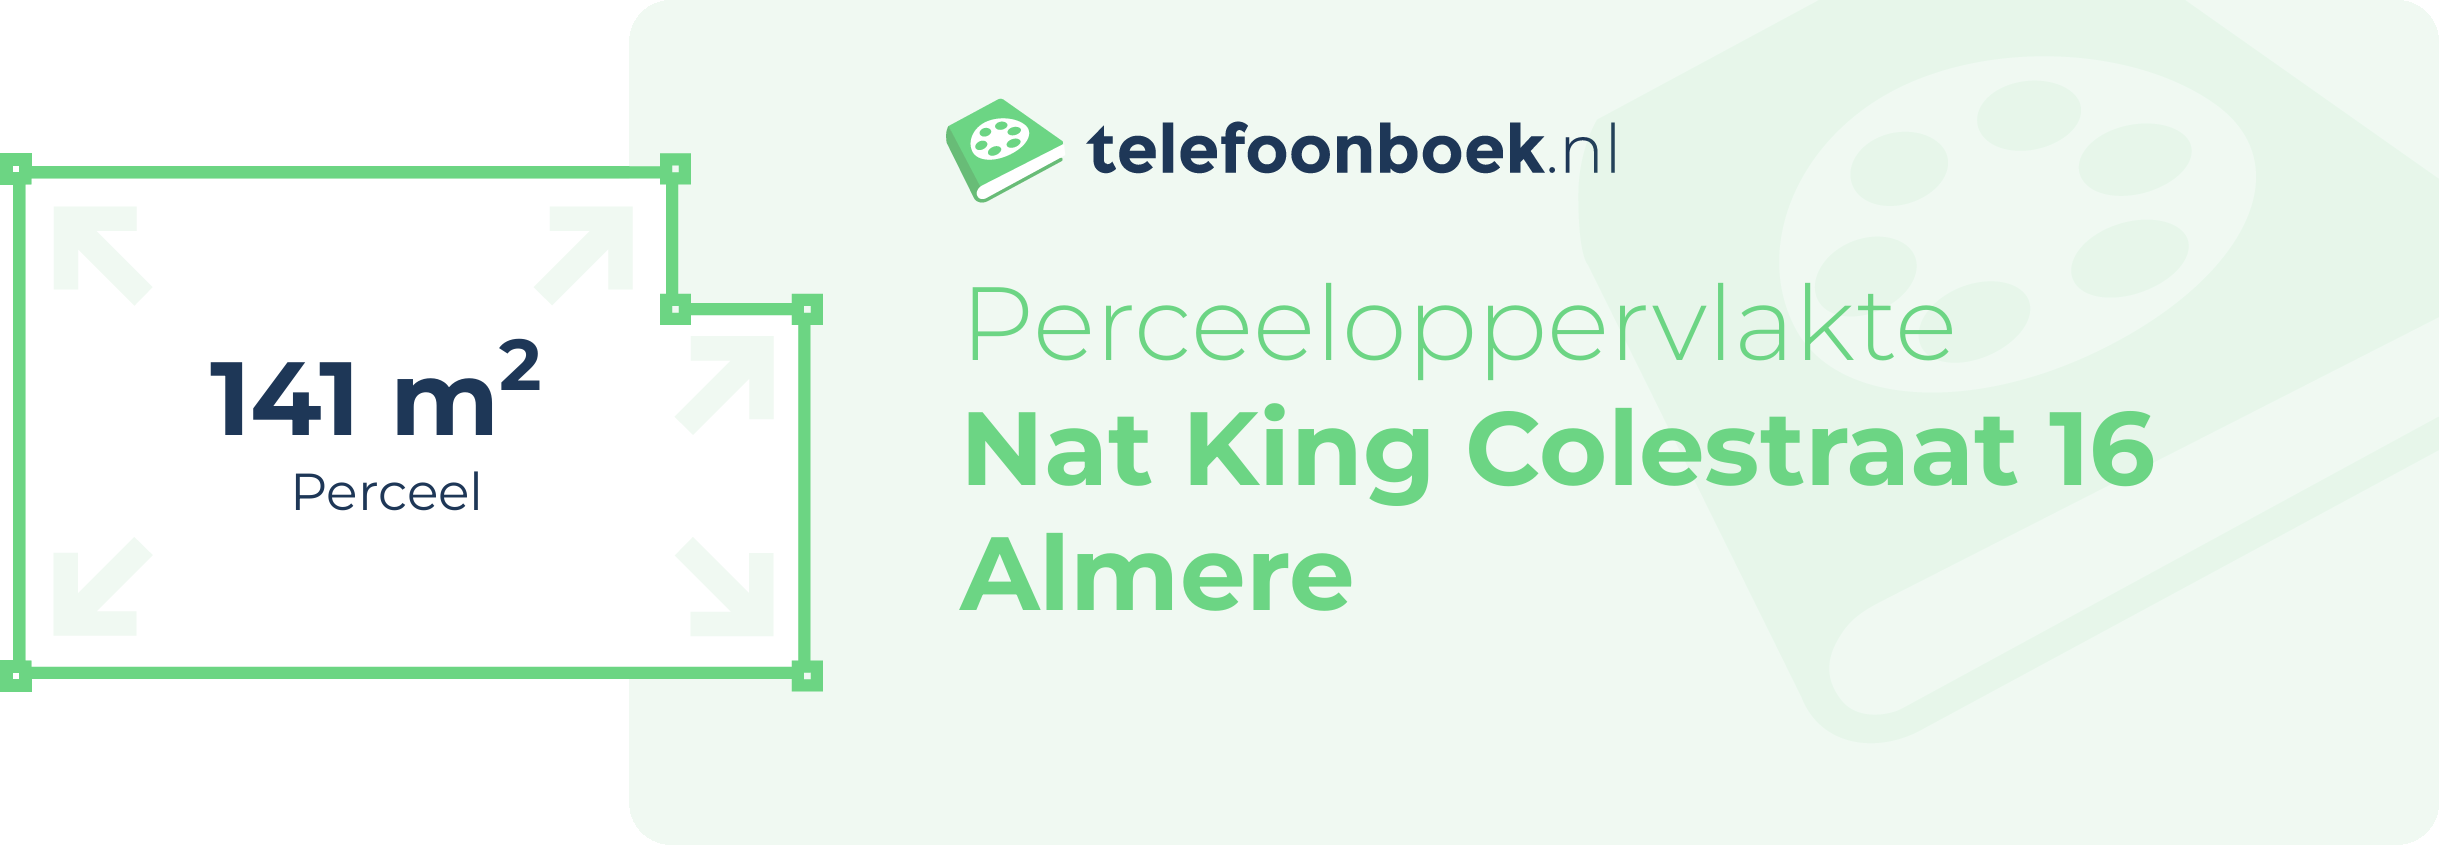 Perceeloppervlakte Nat King Colestraat 16 Almere